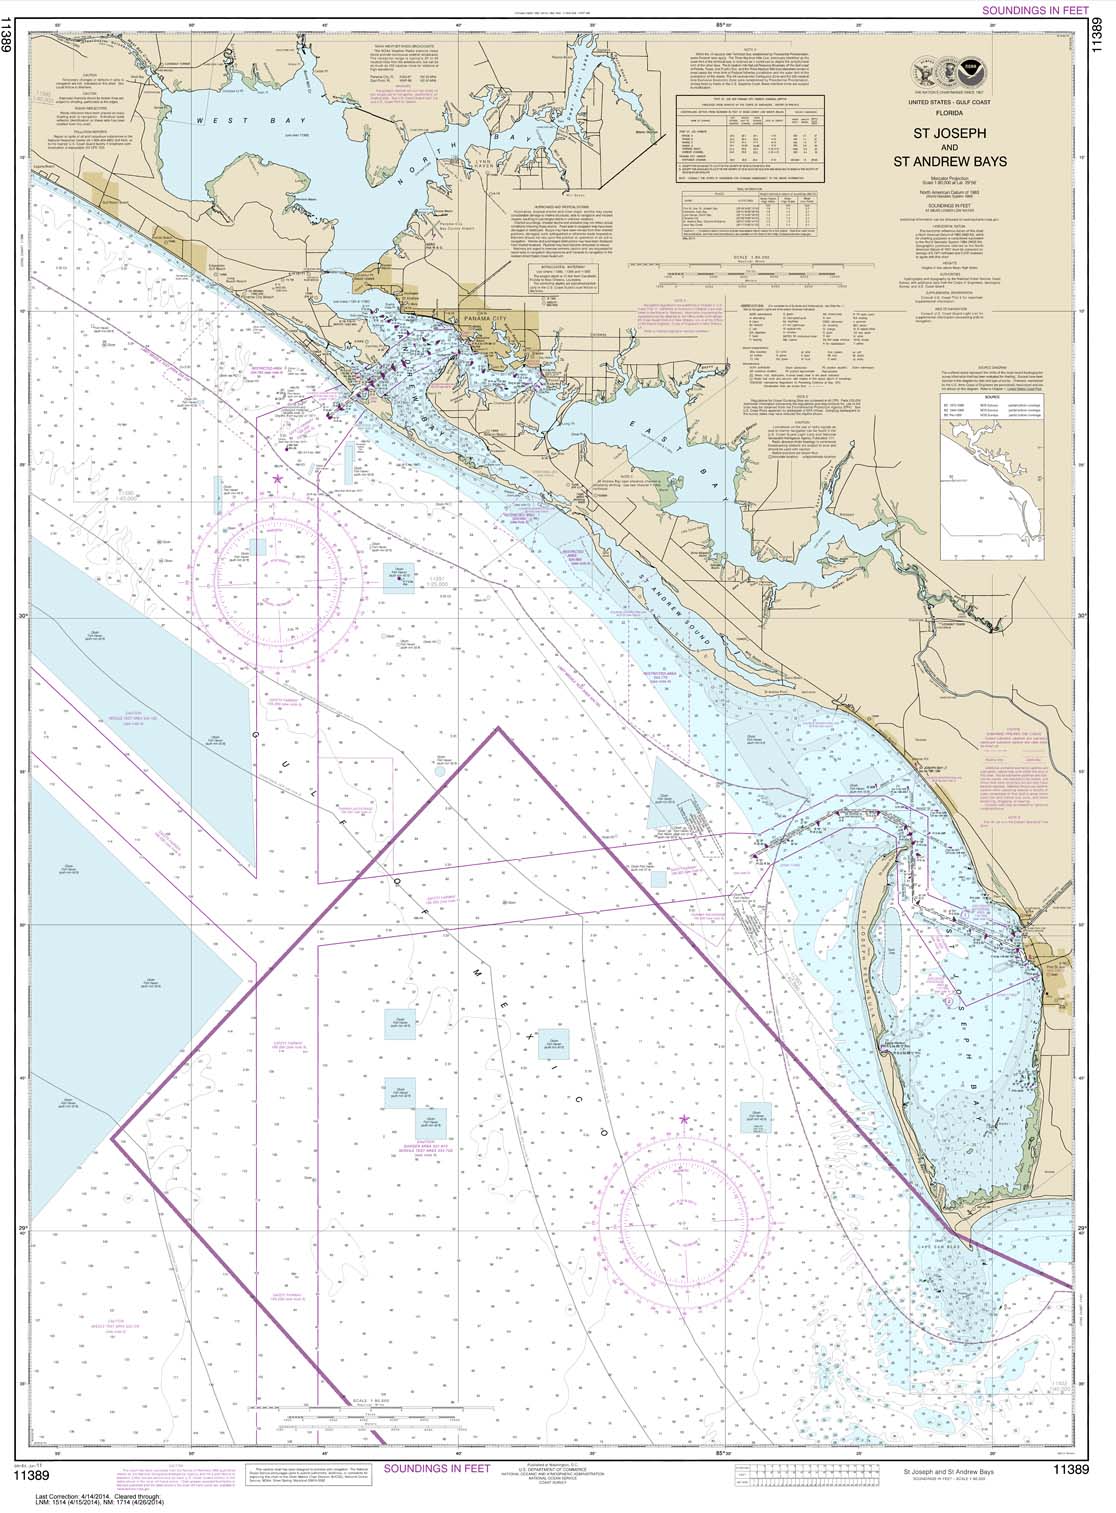 NOAA Chart 11389: St Joseph and St Andrew Bays